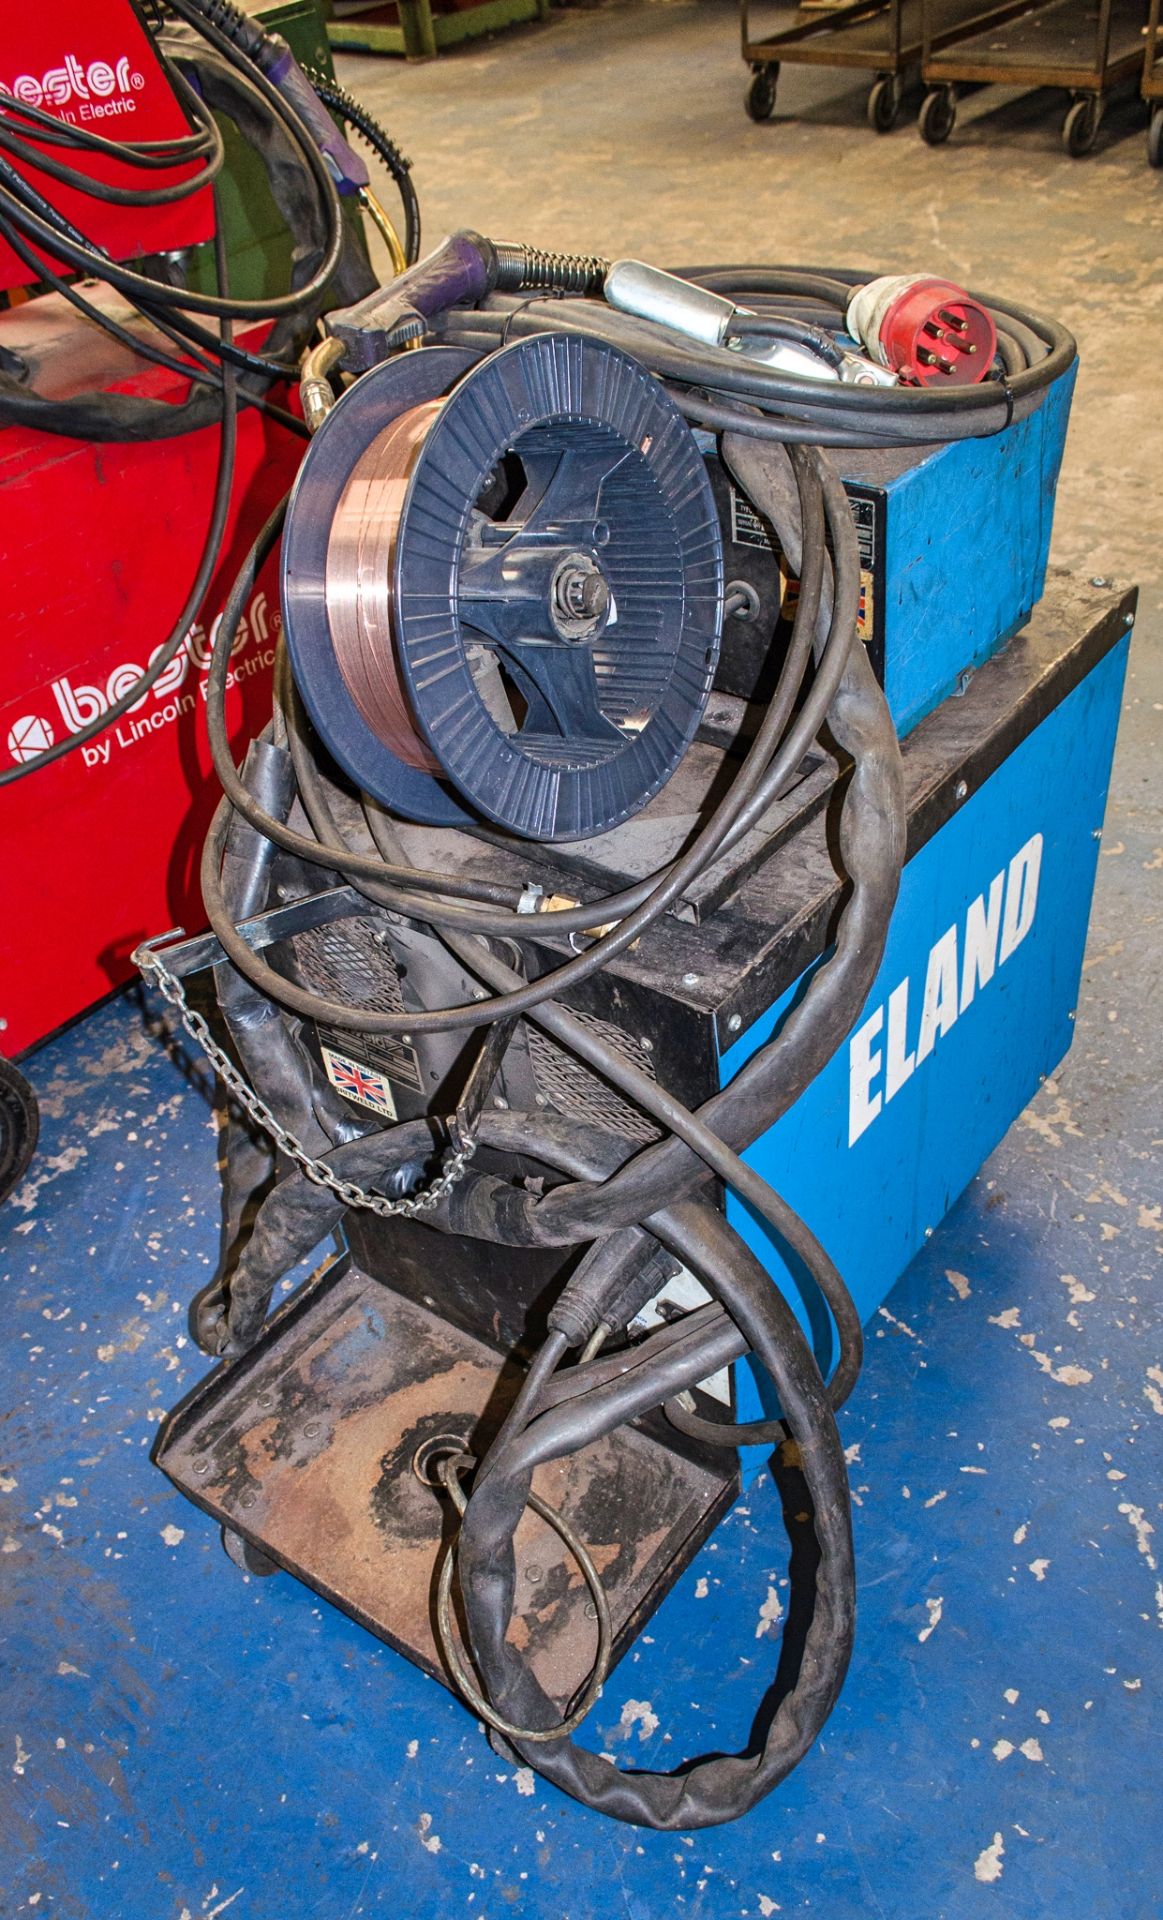 Eland Mig 380 mig welding set c/w remote wire feed - Image 2 of 3